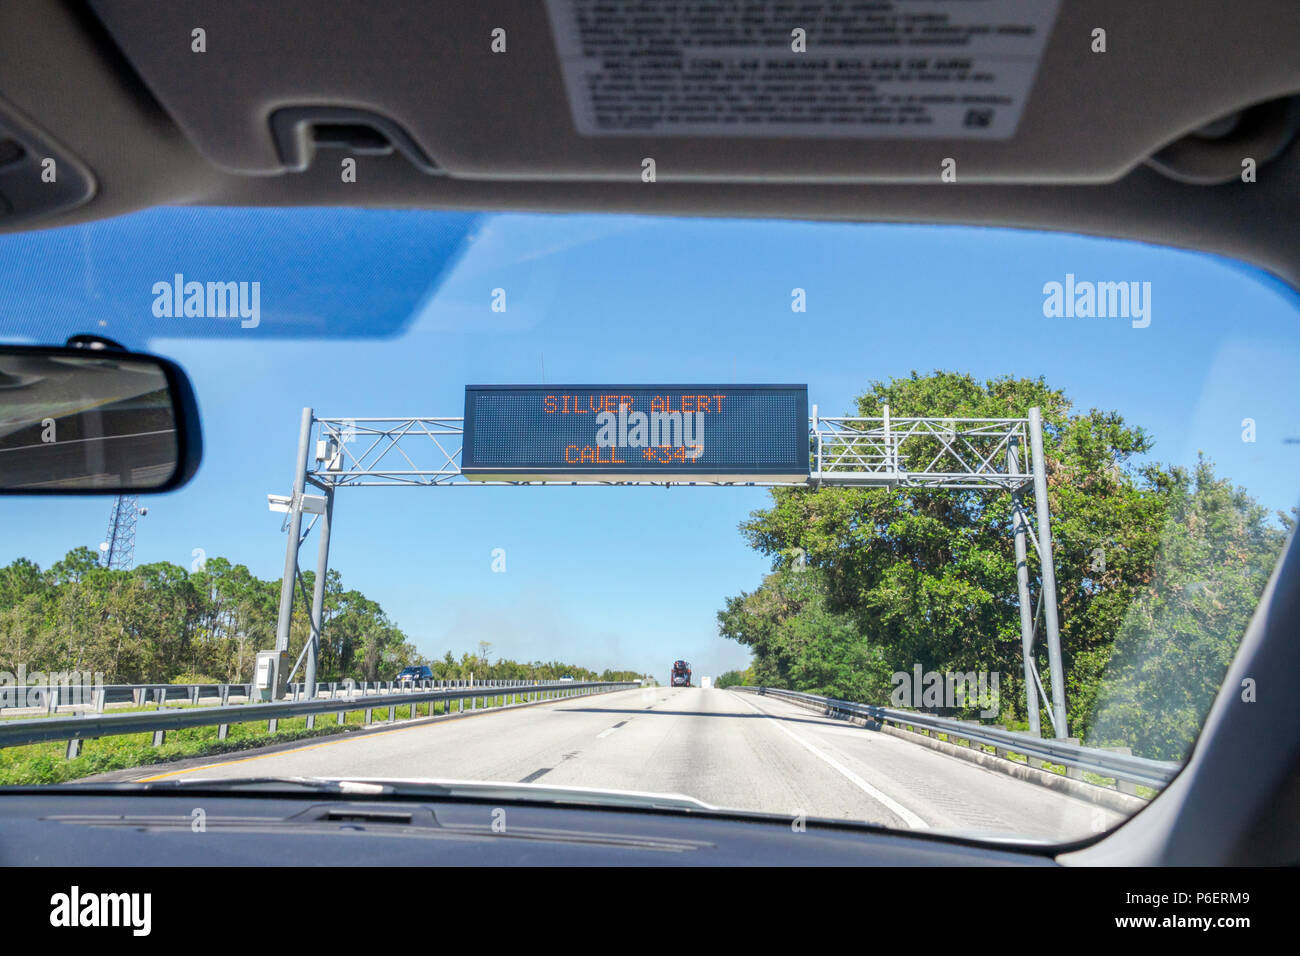 Florida, Fort Ft. Pierce, carretera de peaje de Florida Turnpike, cartel electrónico de mensajes, alerta de plata, falta de conductor de ciudadanos mayores,FL171028013 Foto de stock